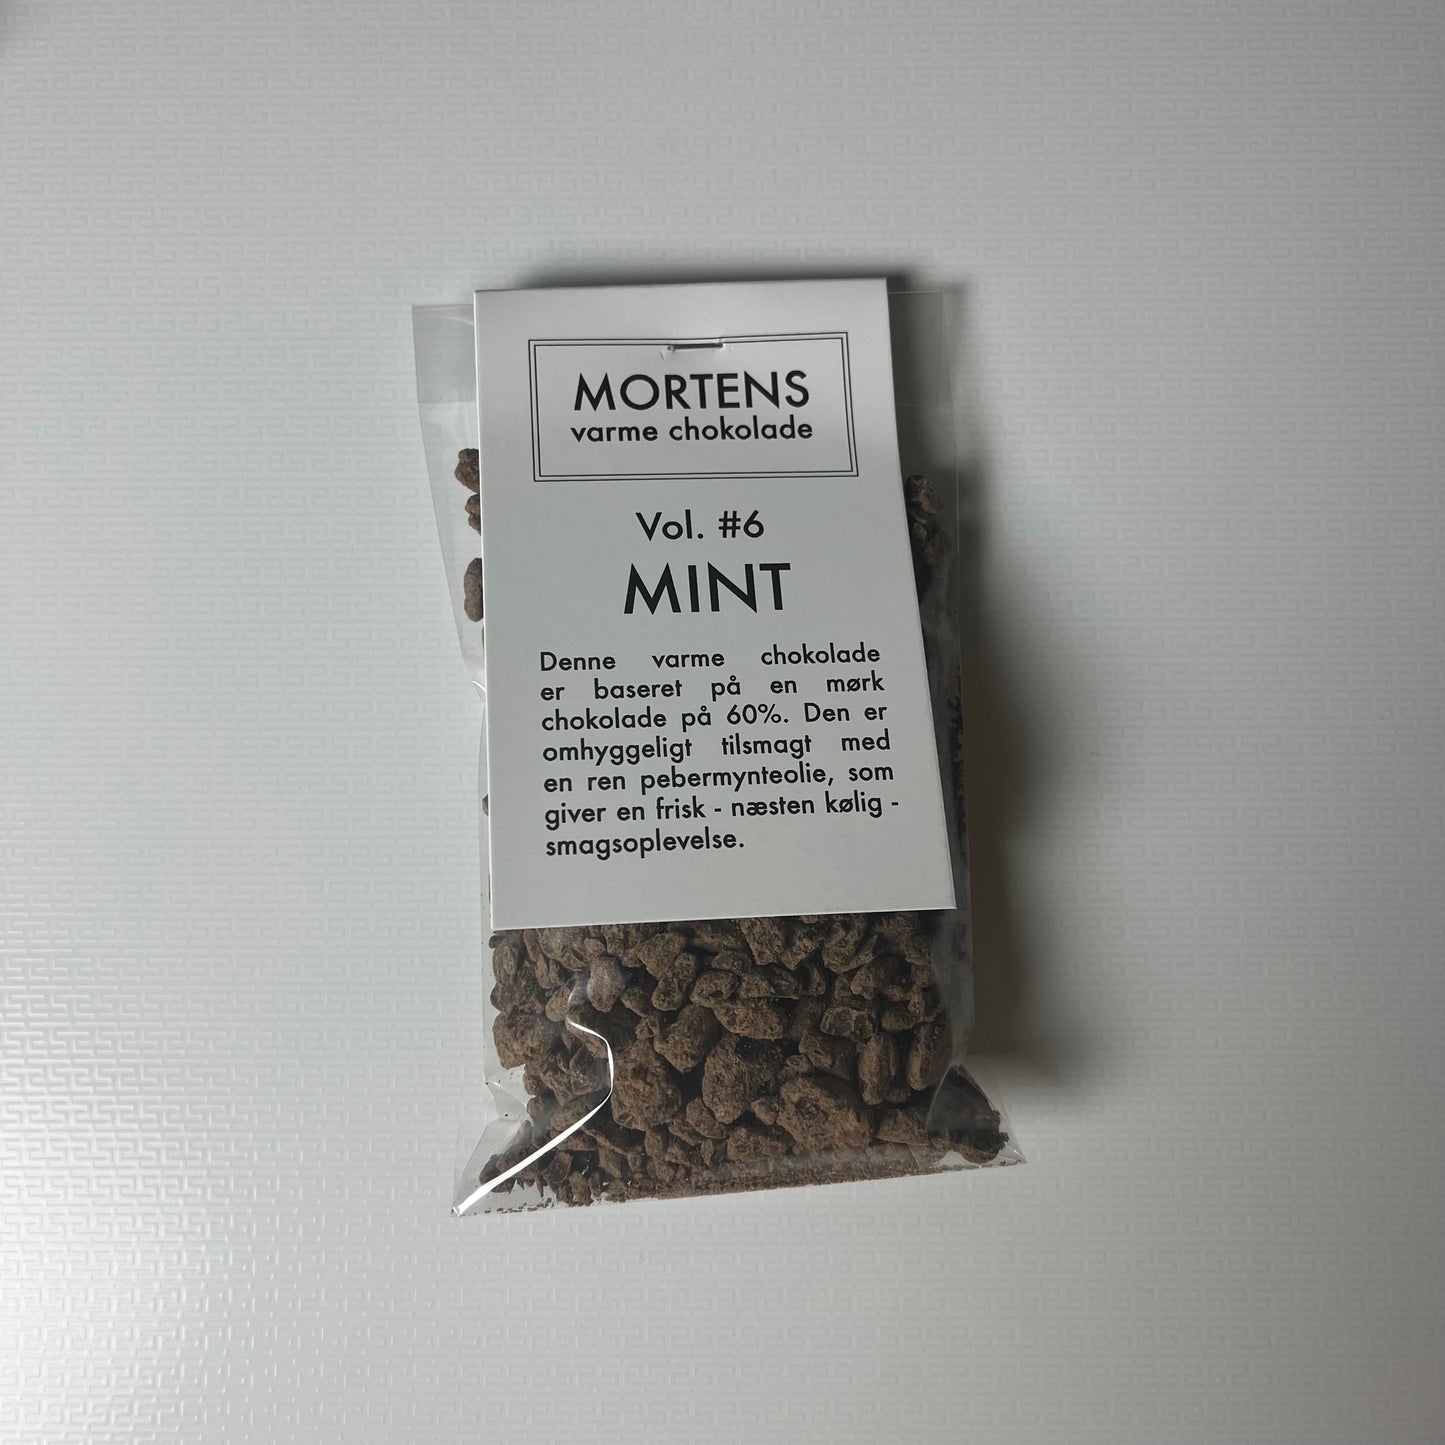 Mortens varme chokolade - 1 pose (MINT)